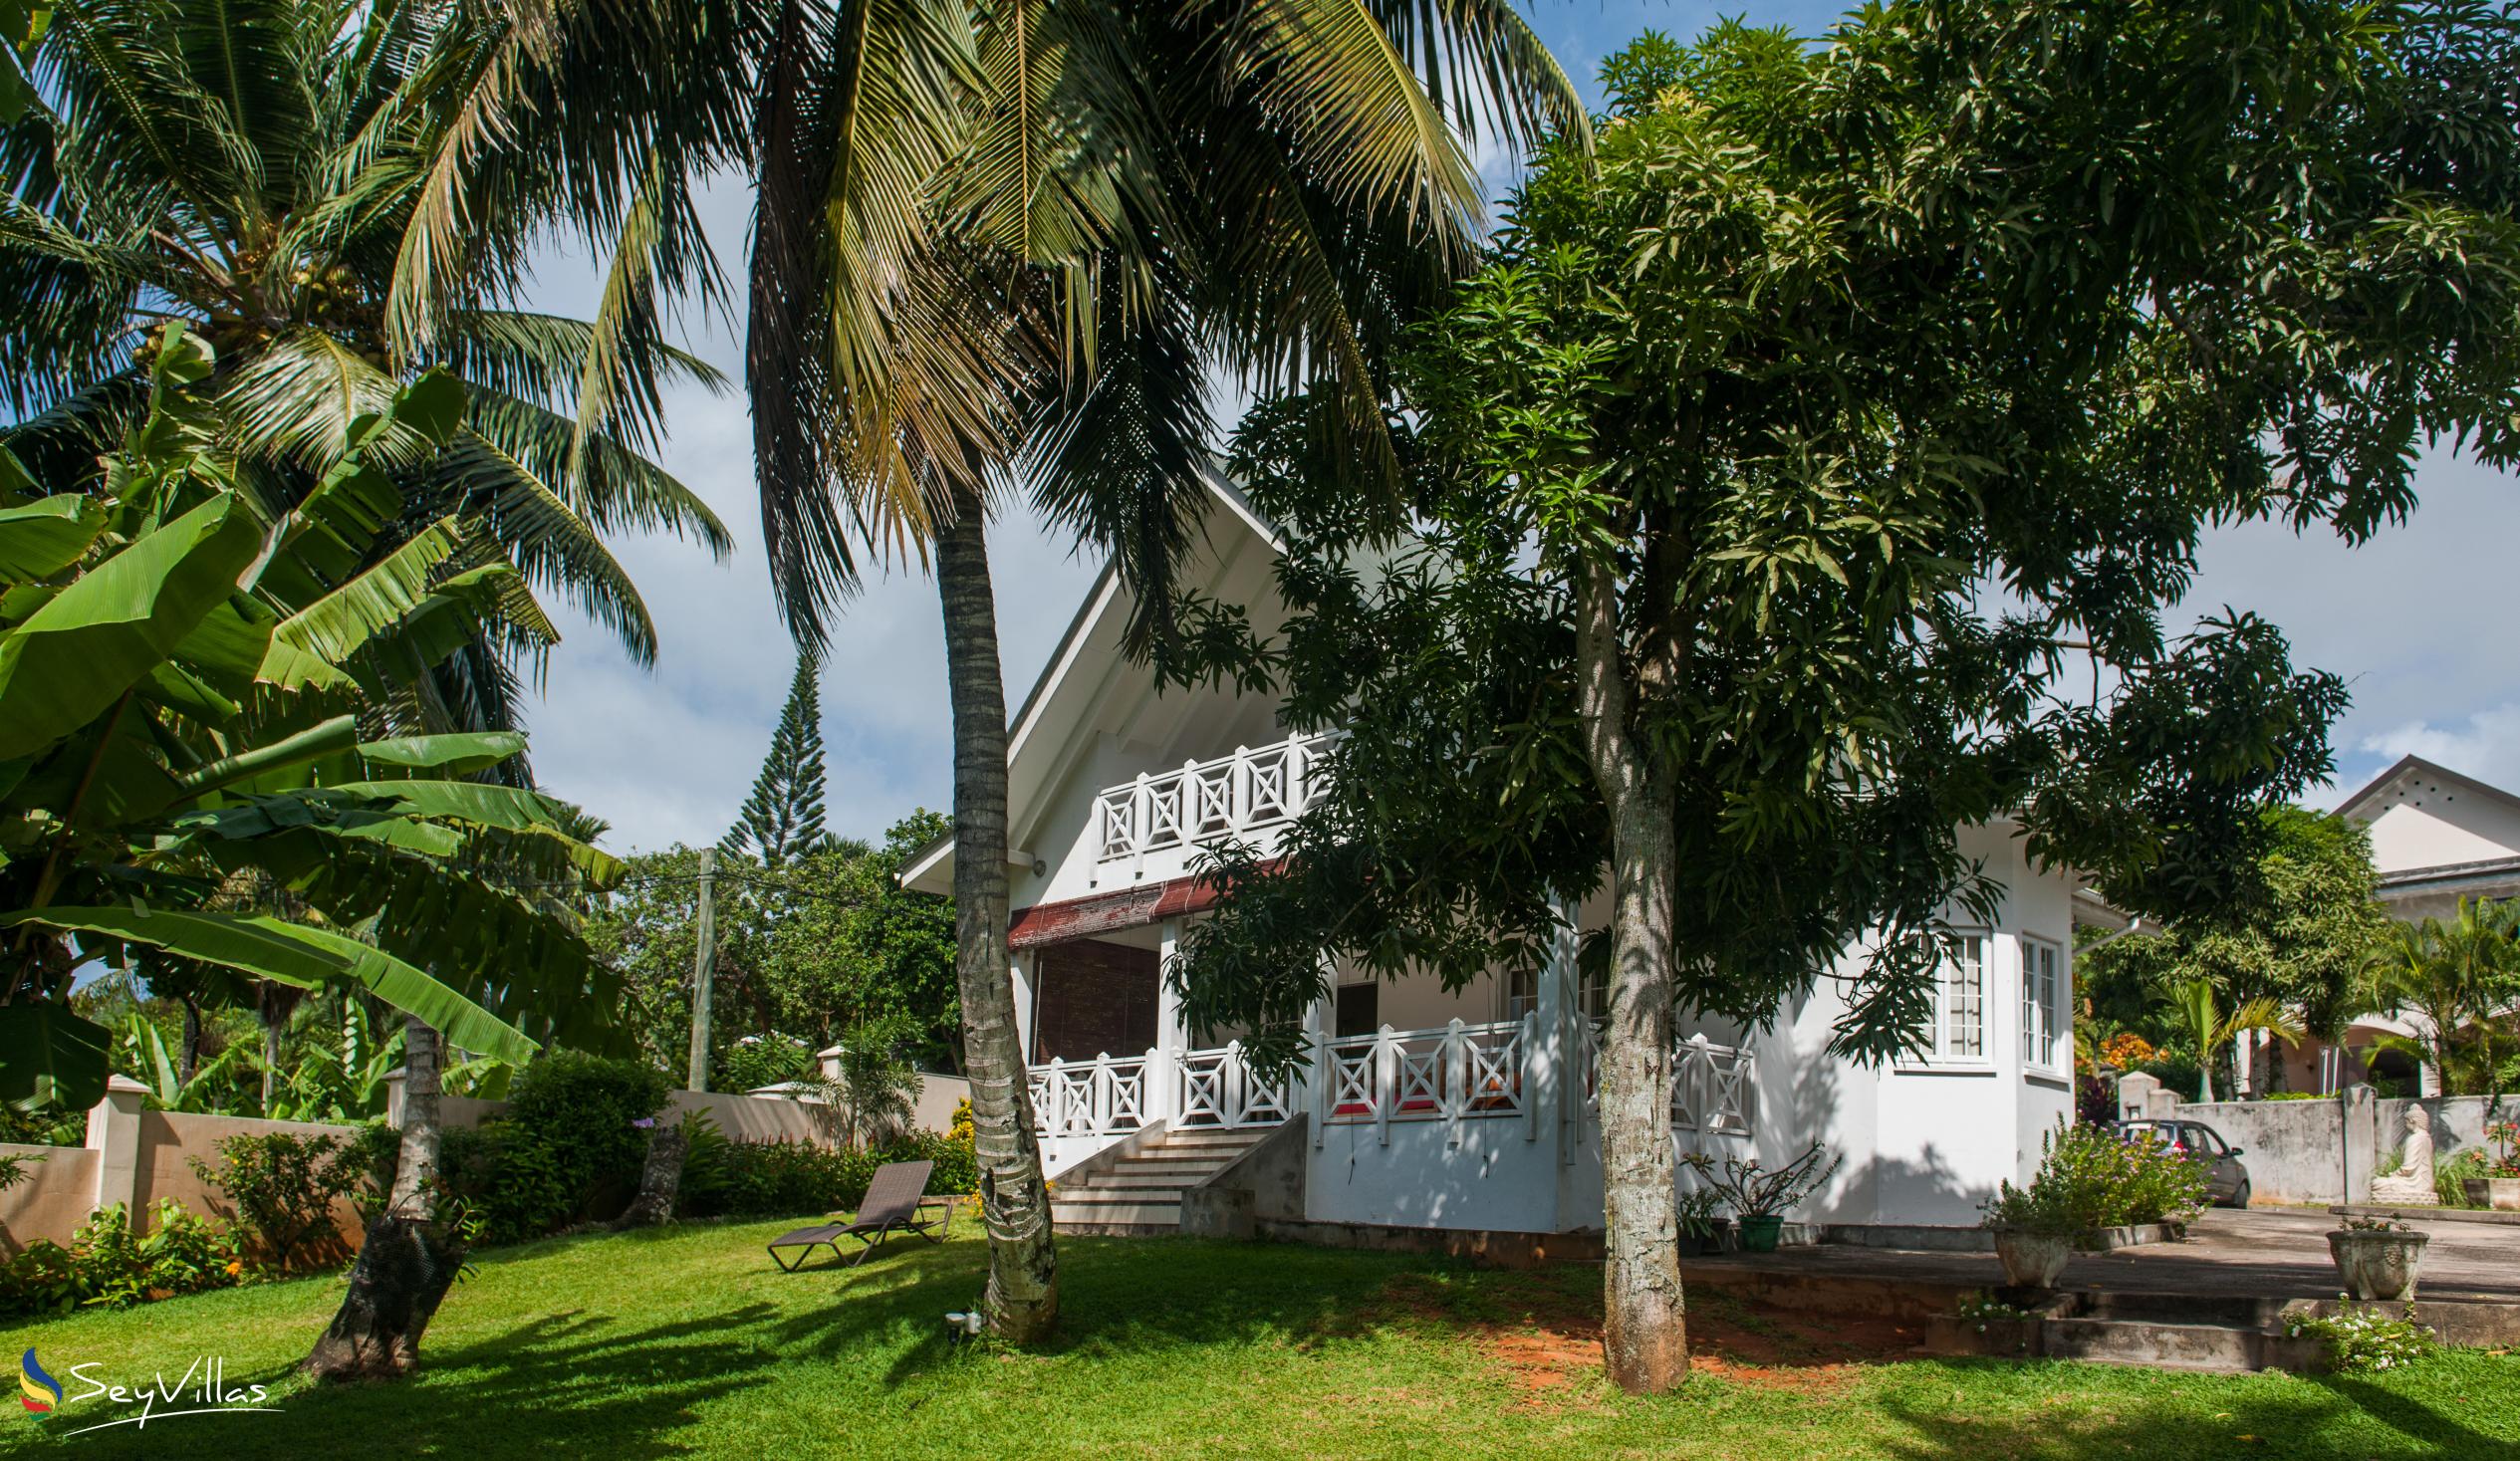 Photo 4: Le Domaine de Bacova - Outdoor area - Mahé (Seychelles)